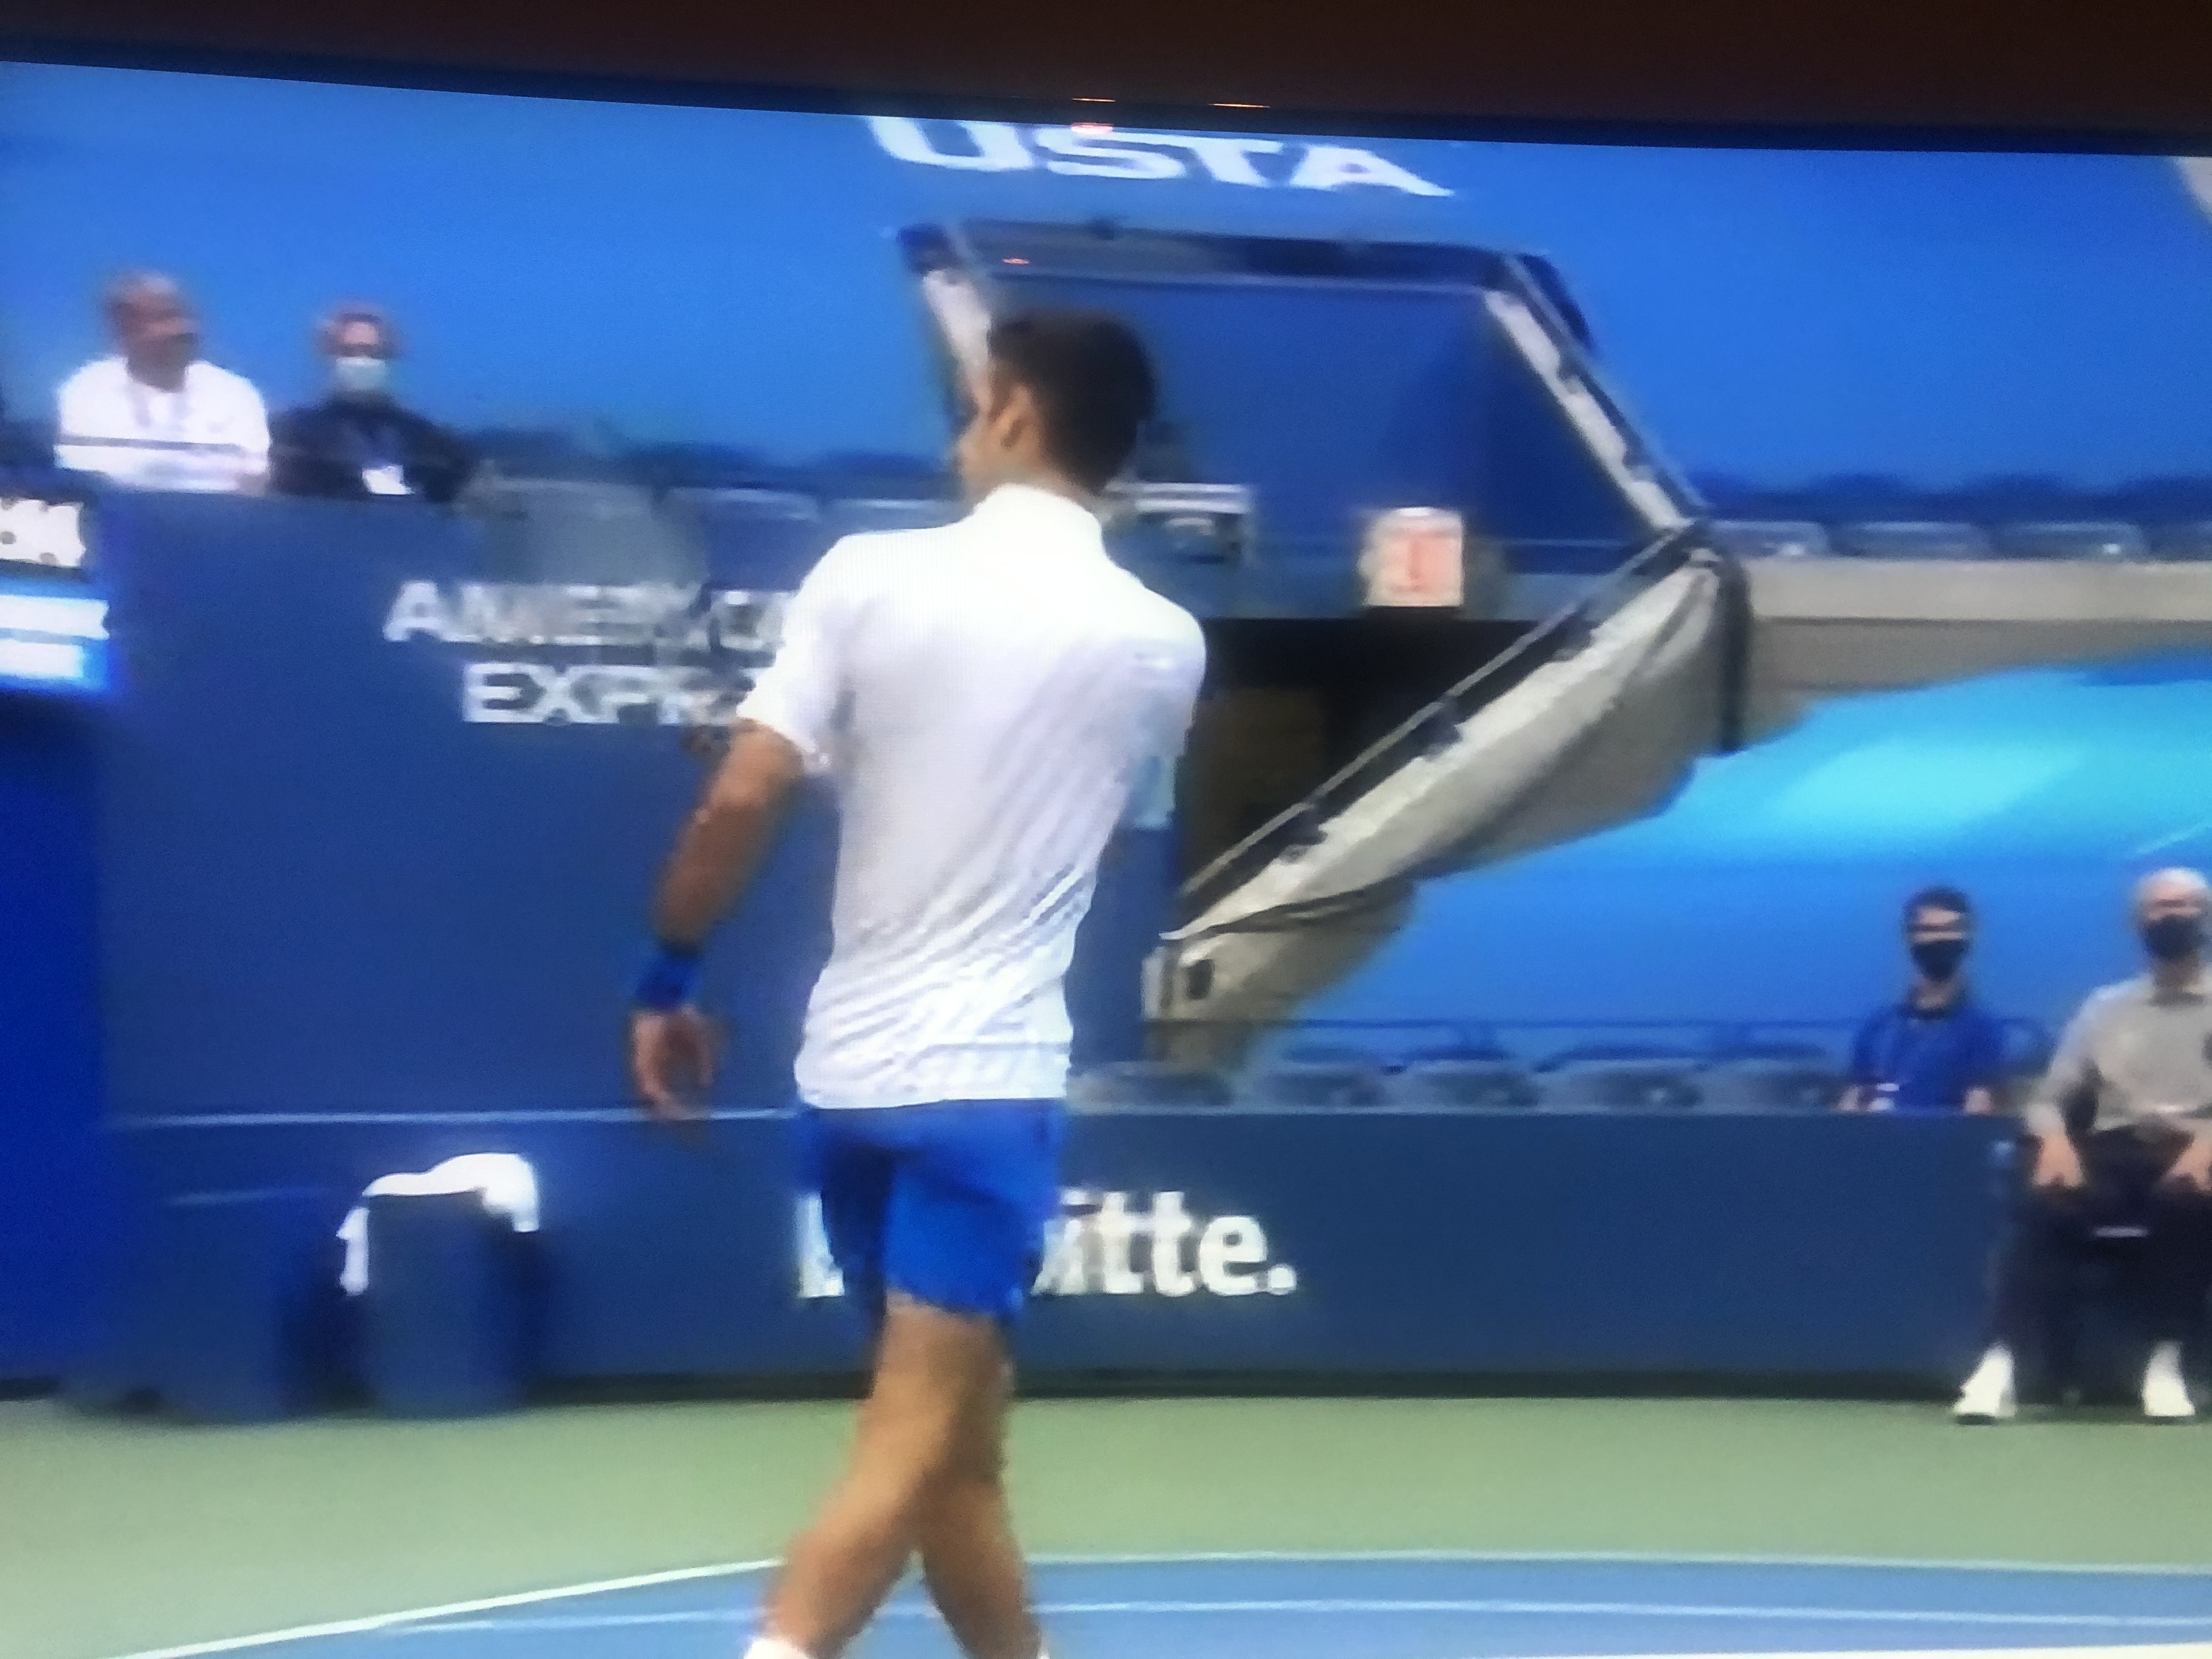 Djokovic hitting the ball